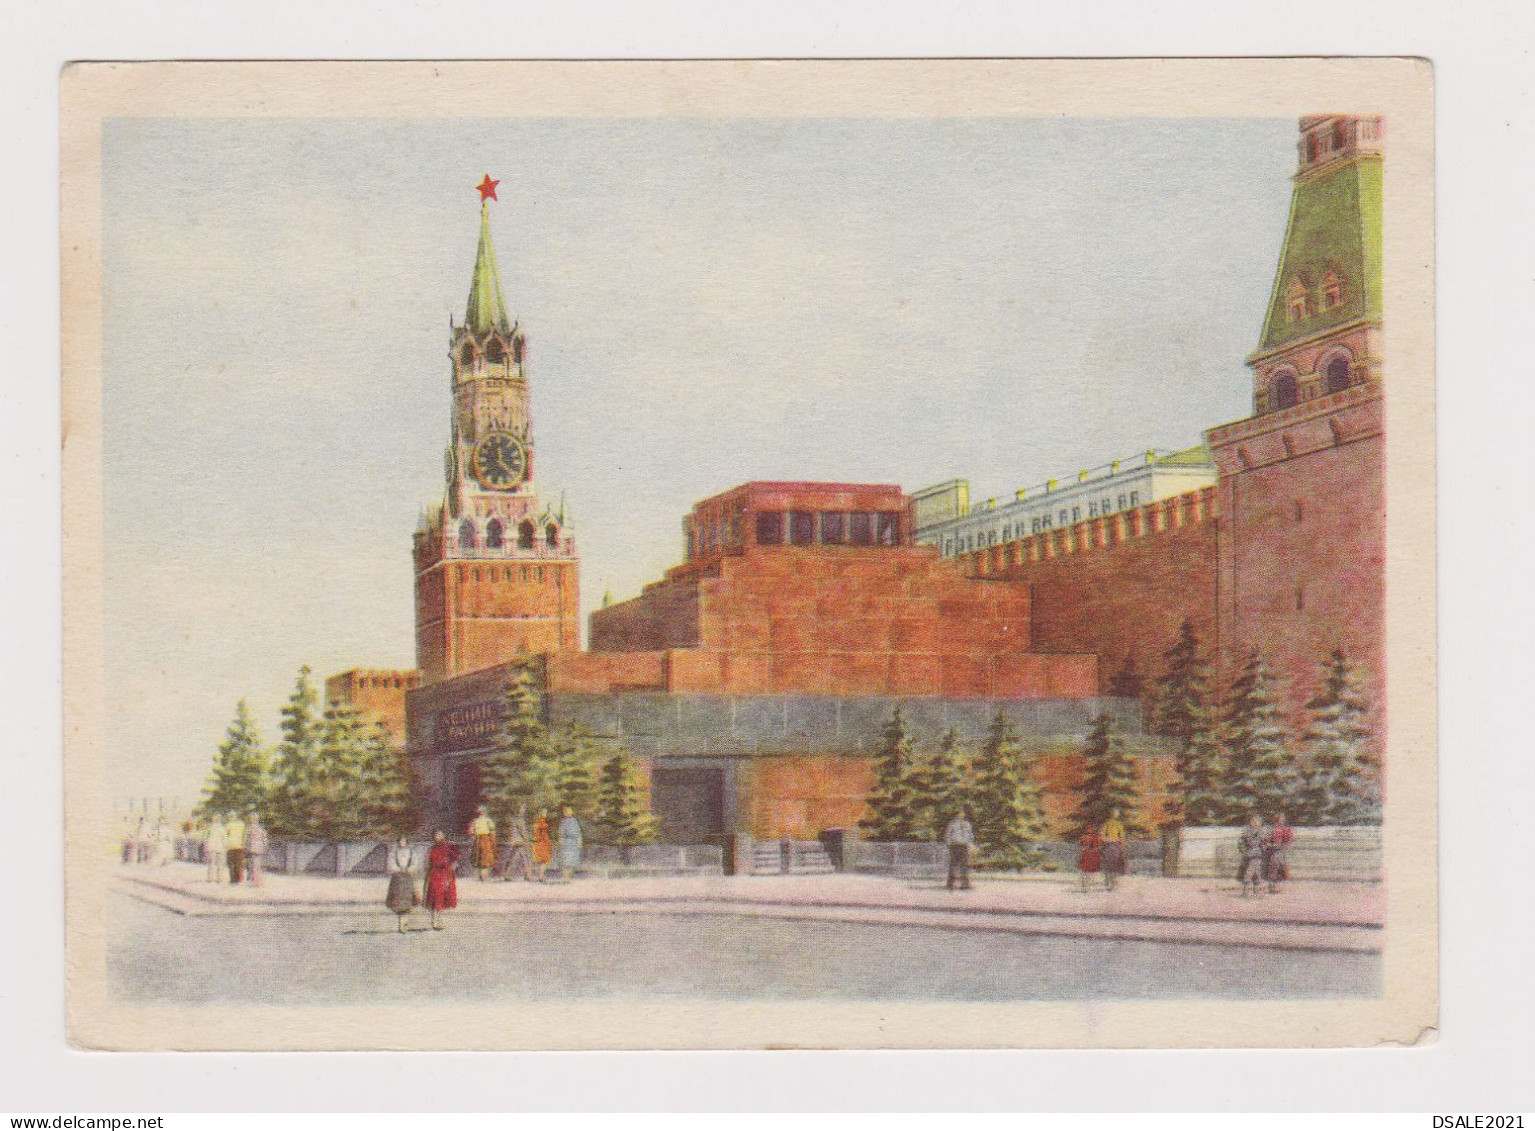 Russia USSR Soviet Union 1954 Postal Stationery Card PSC Pc Moscow Red Square LENIN Mausoleum Communist Propaganda 48357 - 1950-59